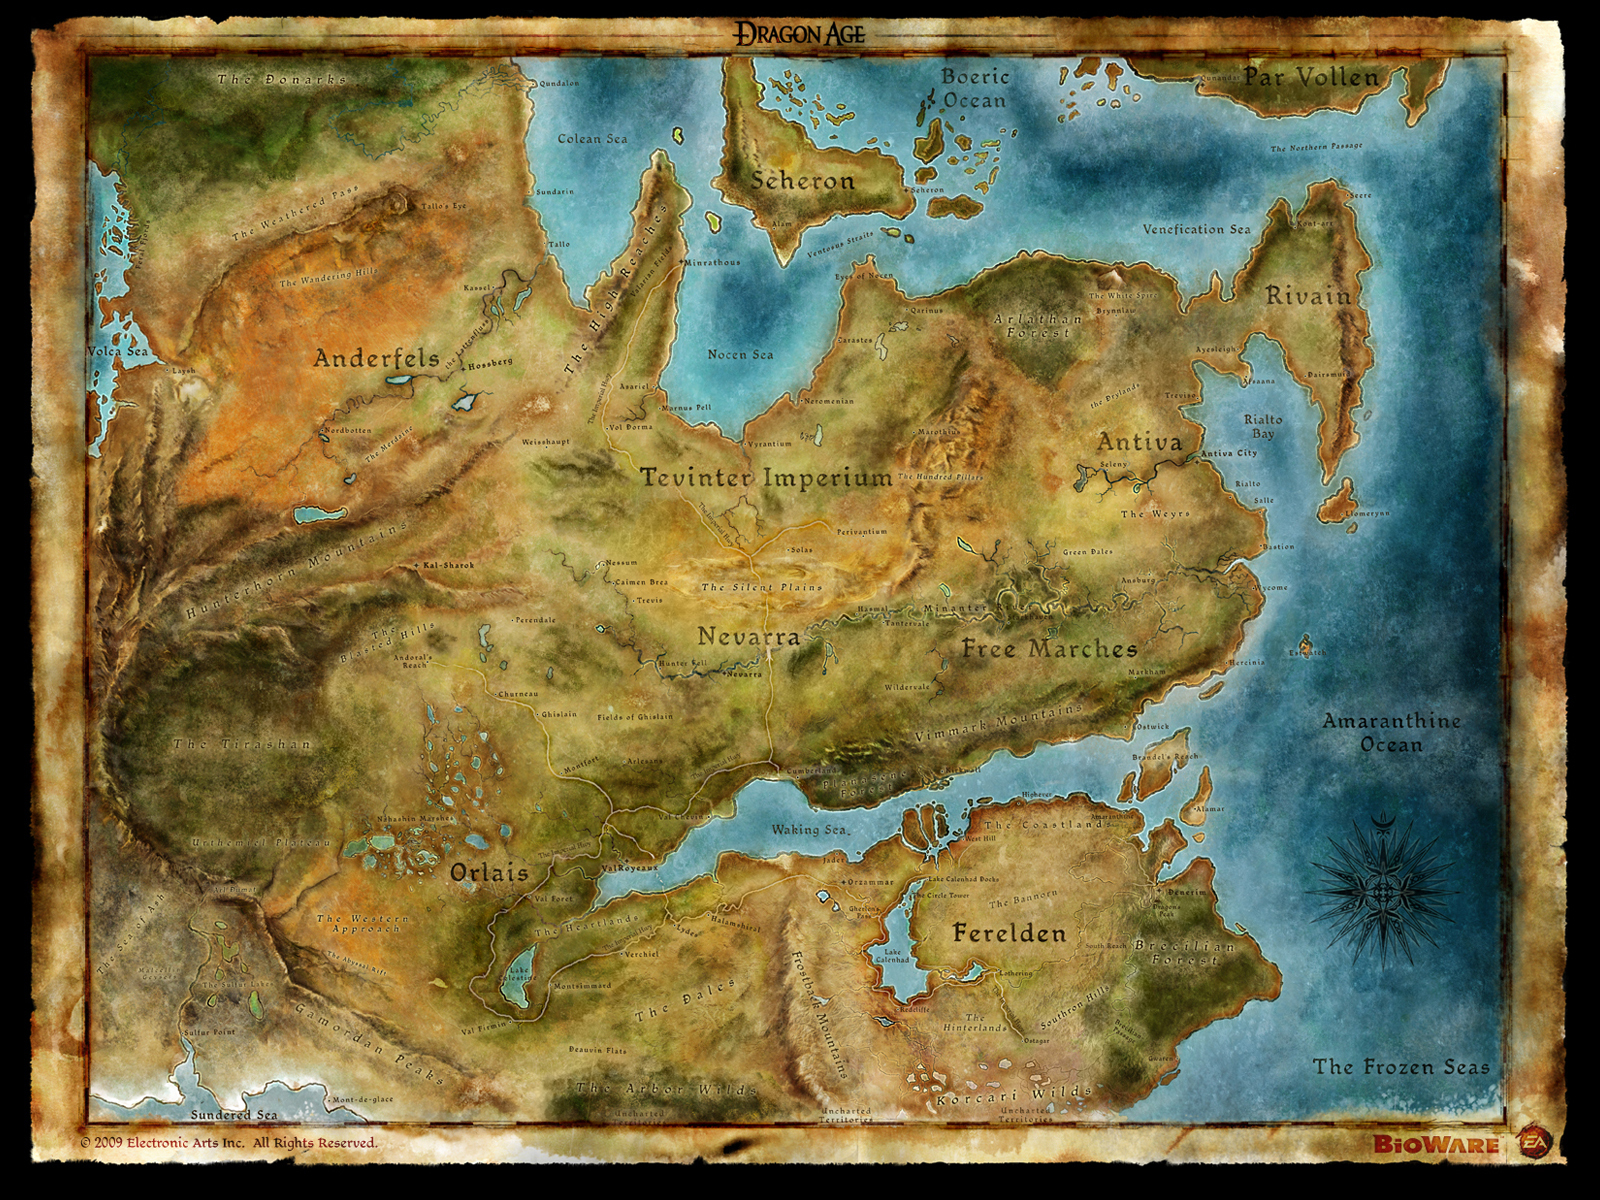 Dragon Age Origin Wallpapers, Dragon Age Game, Dragon Origin Overview, Dragon Origin Screenshoot